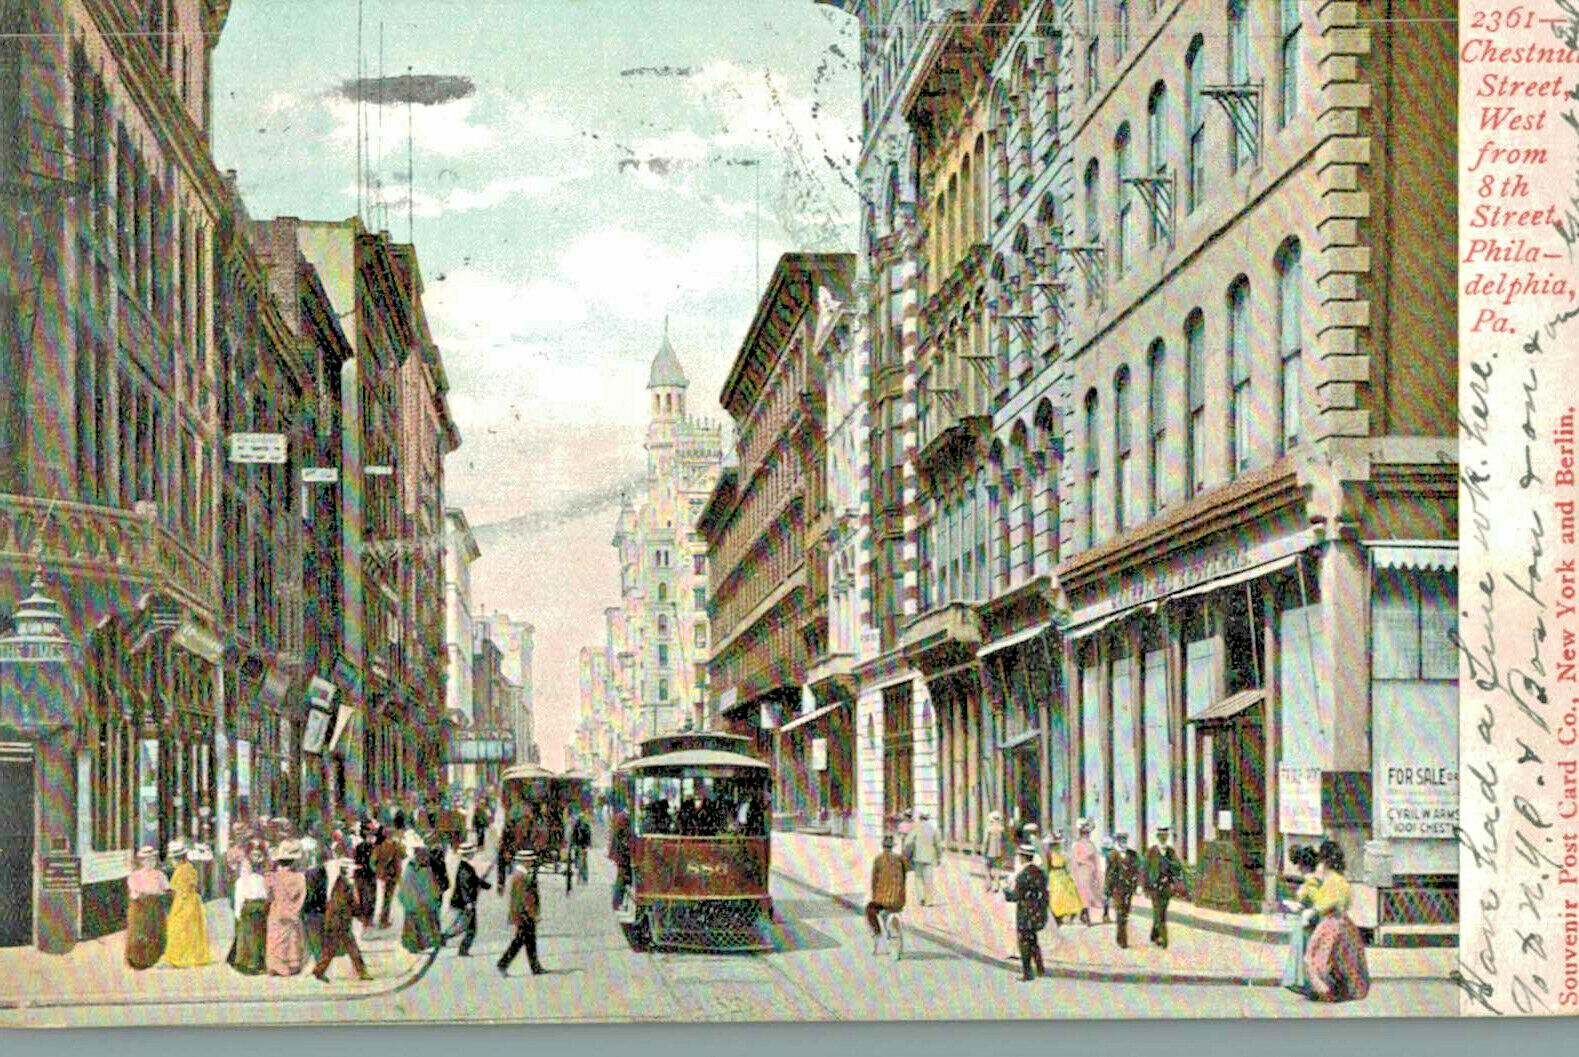 VIntage Postcard-2361. Chestnut Street west from 8th Street, Philadelphia, PA